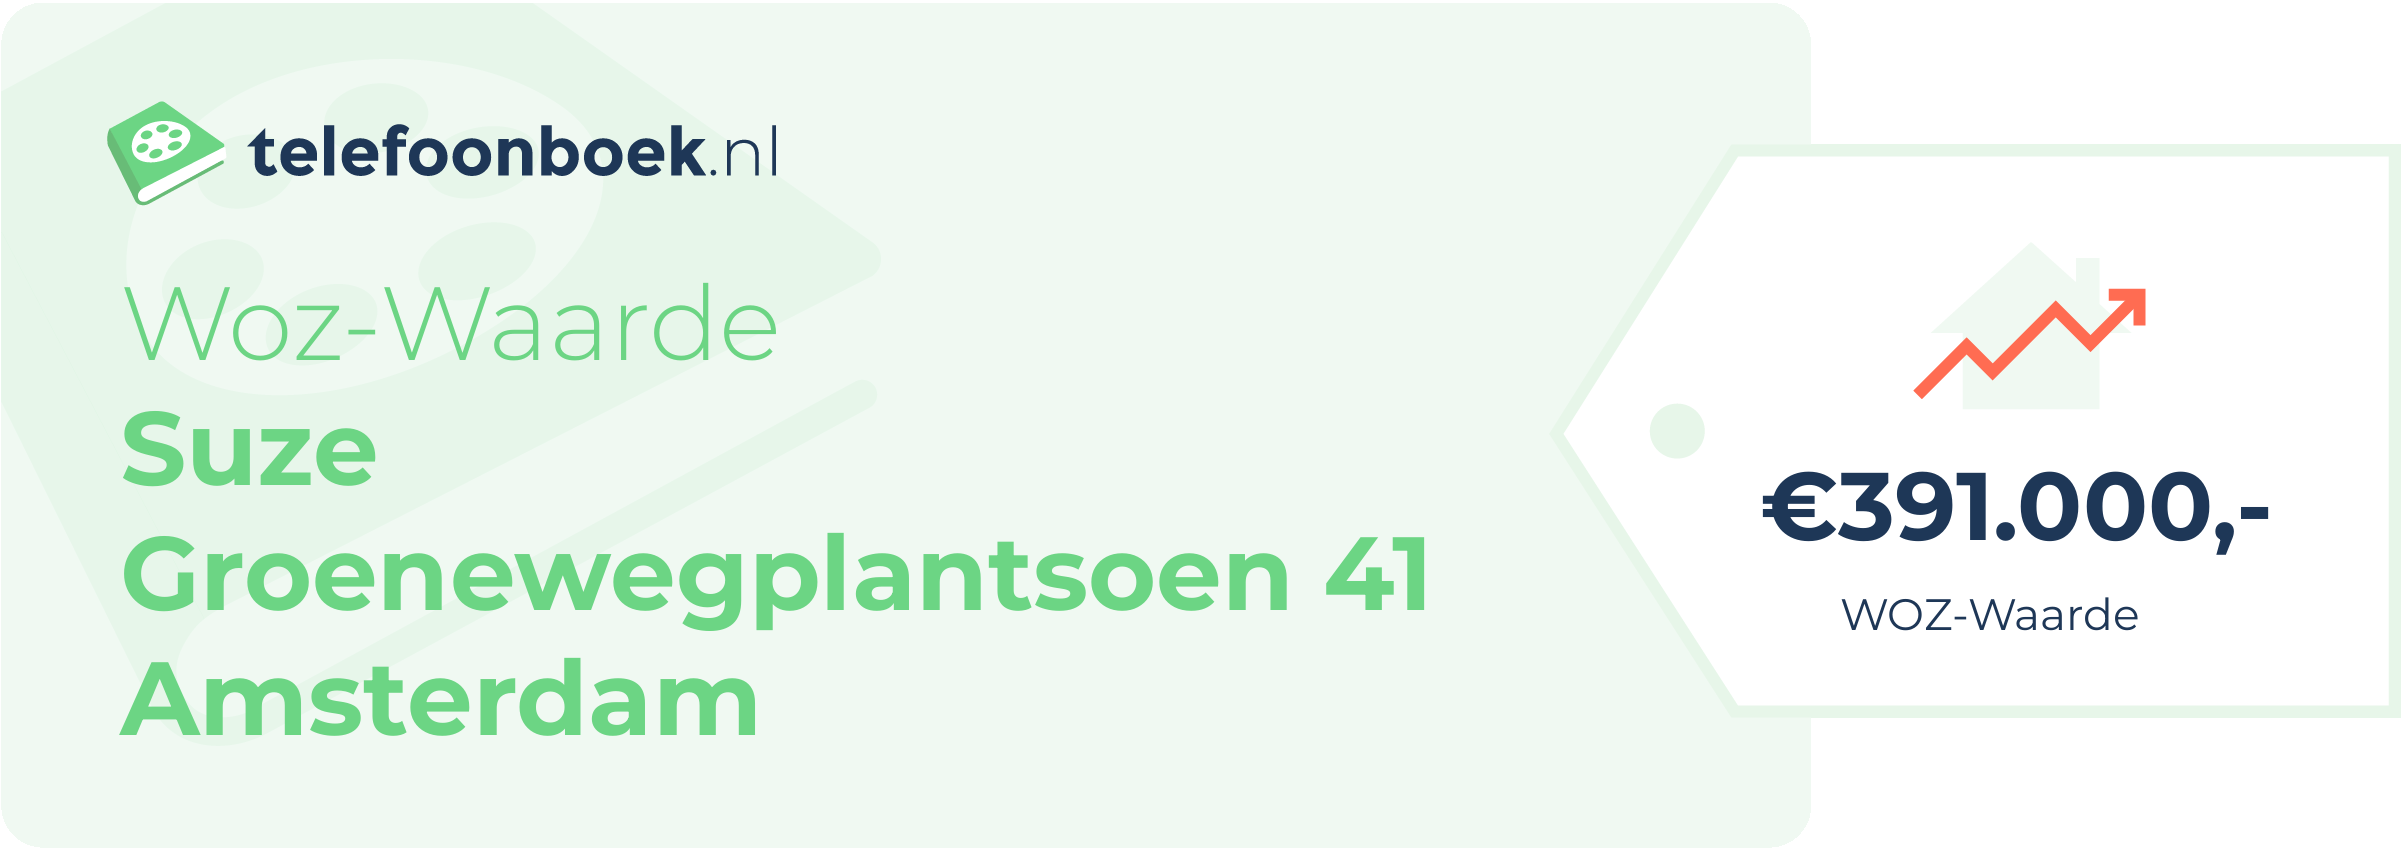 WOZ-waarde Suze Groenewegplantsoen 41 Amsterdam